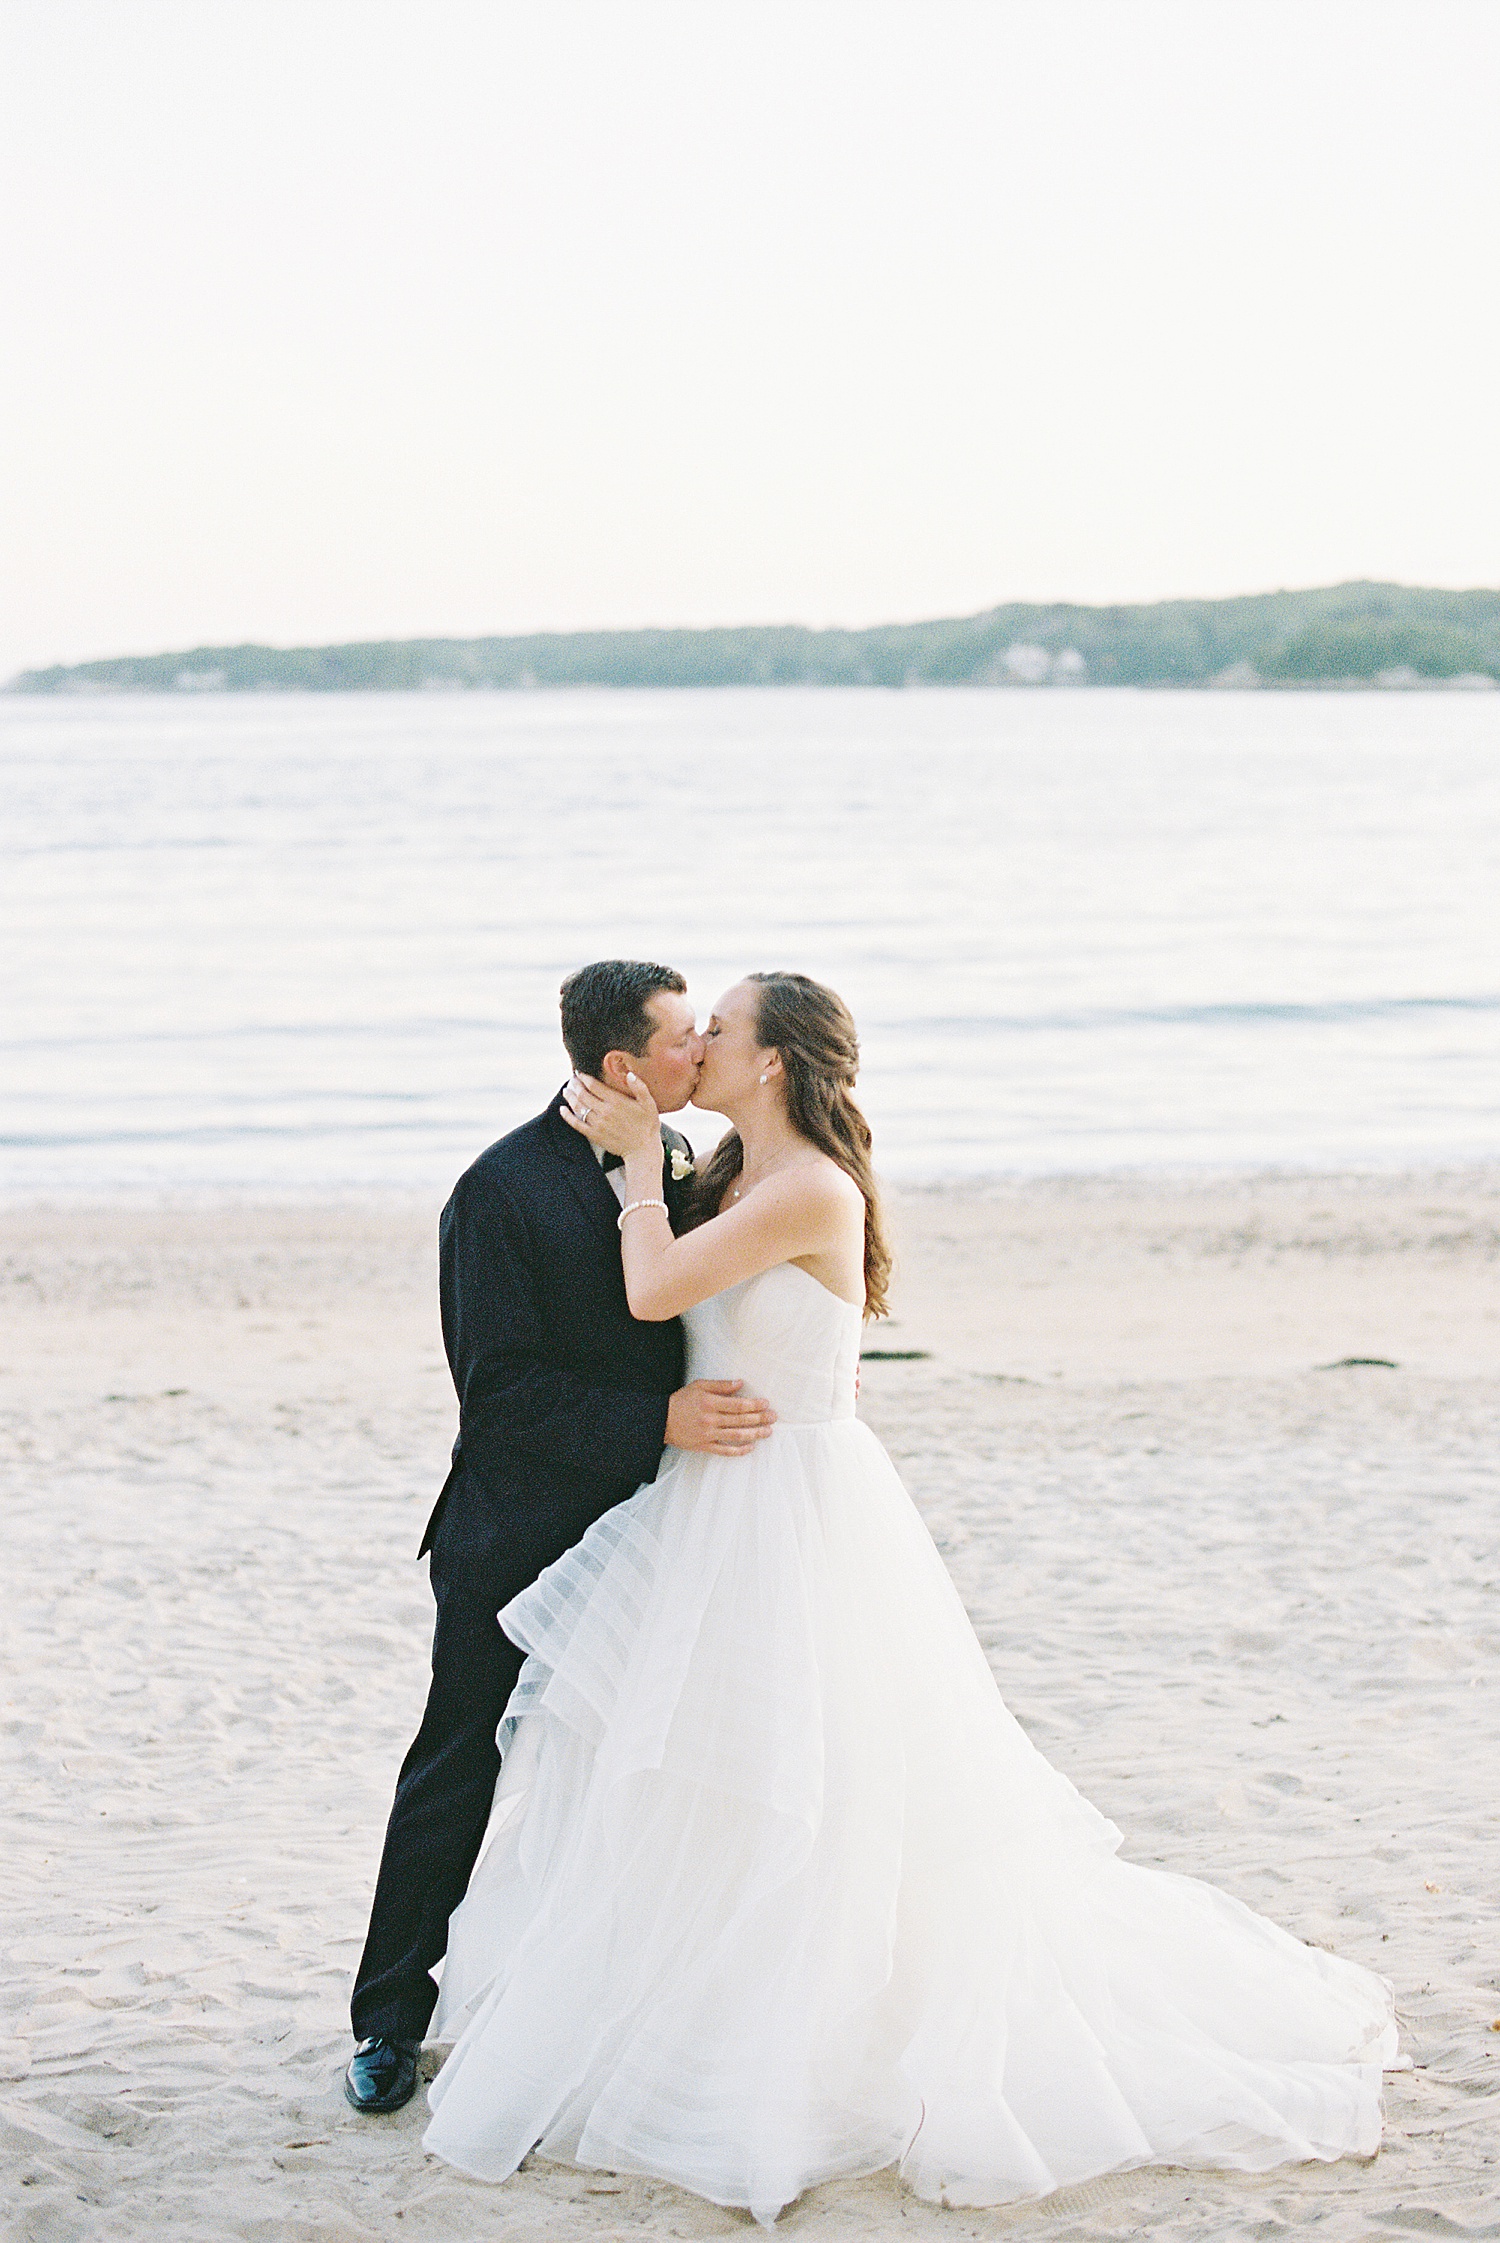 Newlyweds share a kiss on the beach by Massachusetts wedding photographer